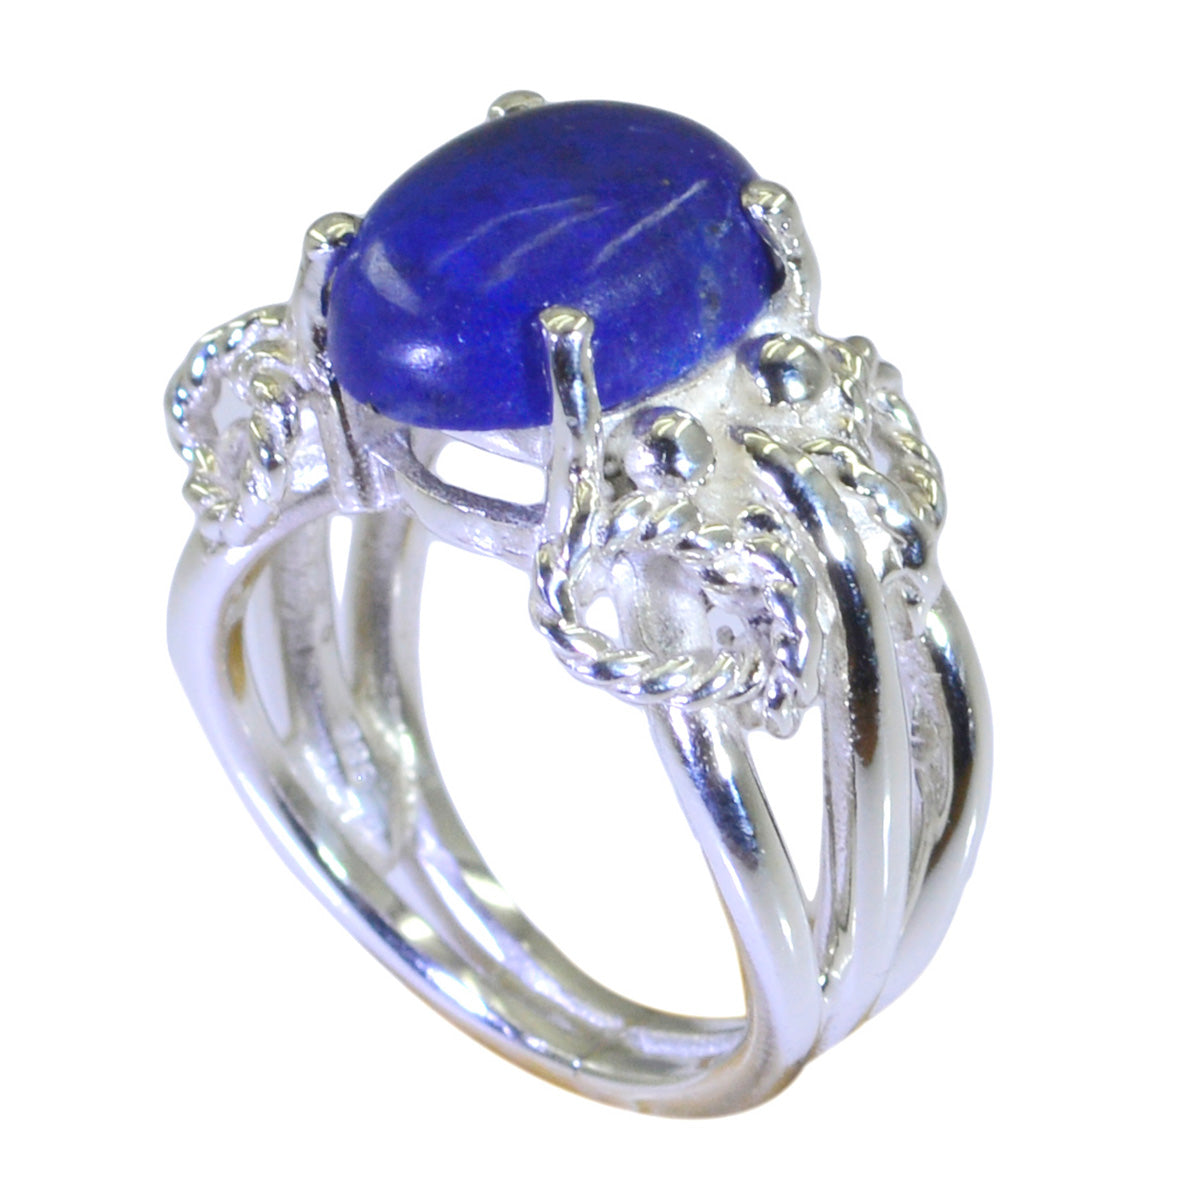 Good Gemstones Lapis Lazuli 925 Sterling Silver Ring Roman Jewelry